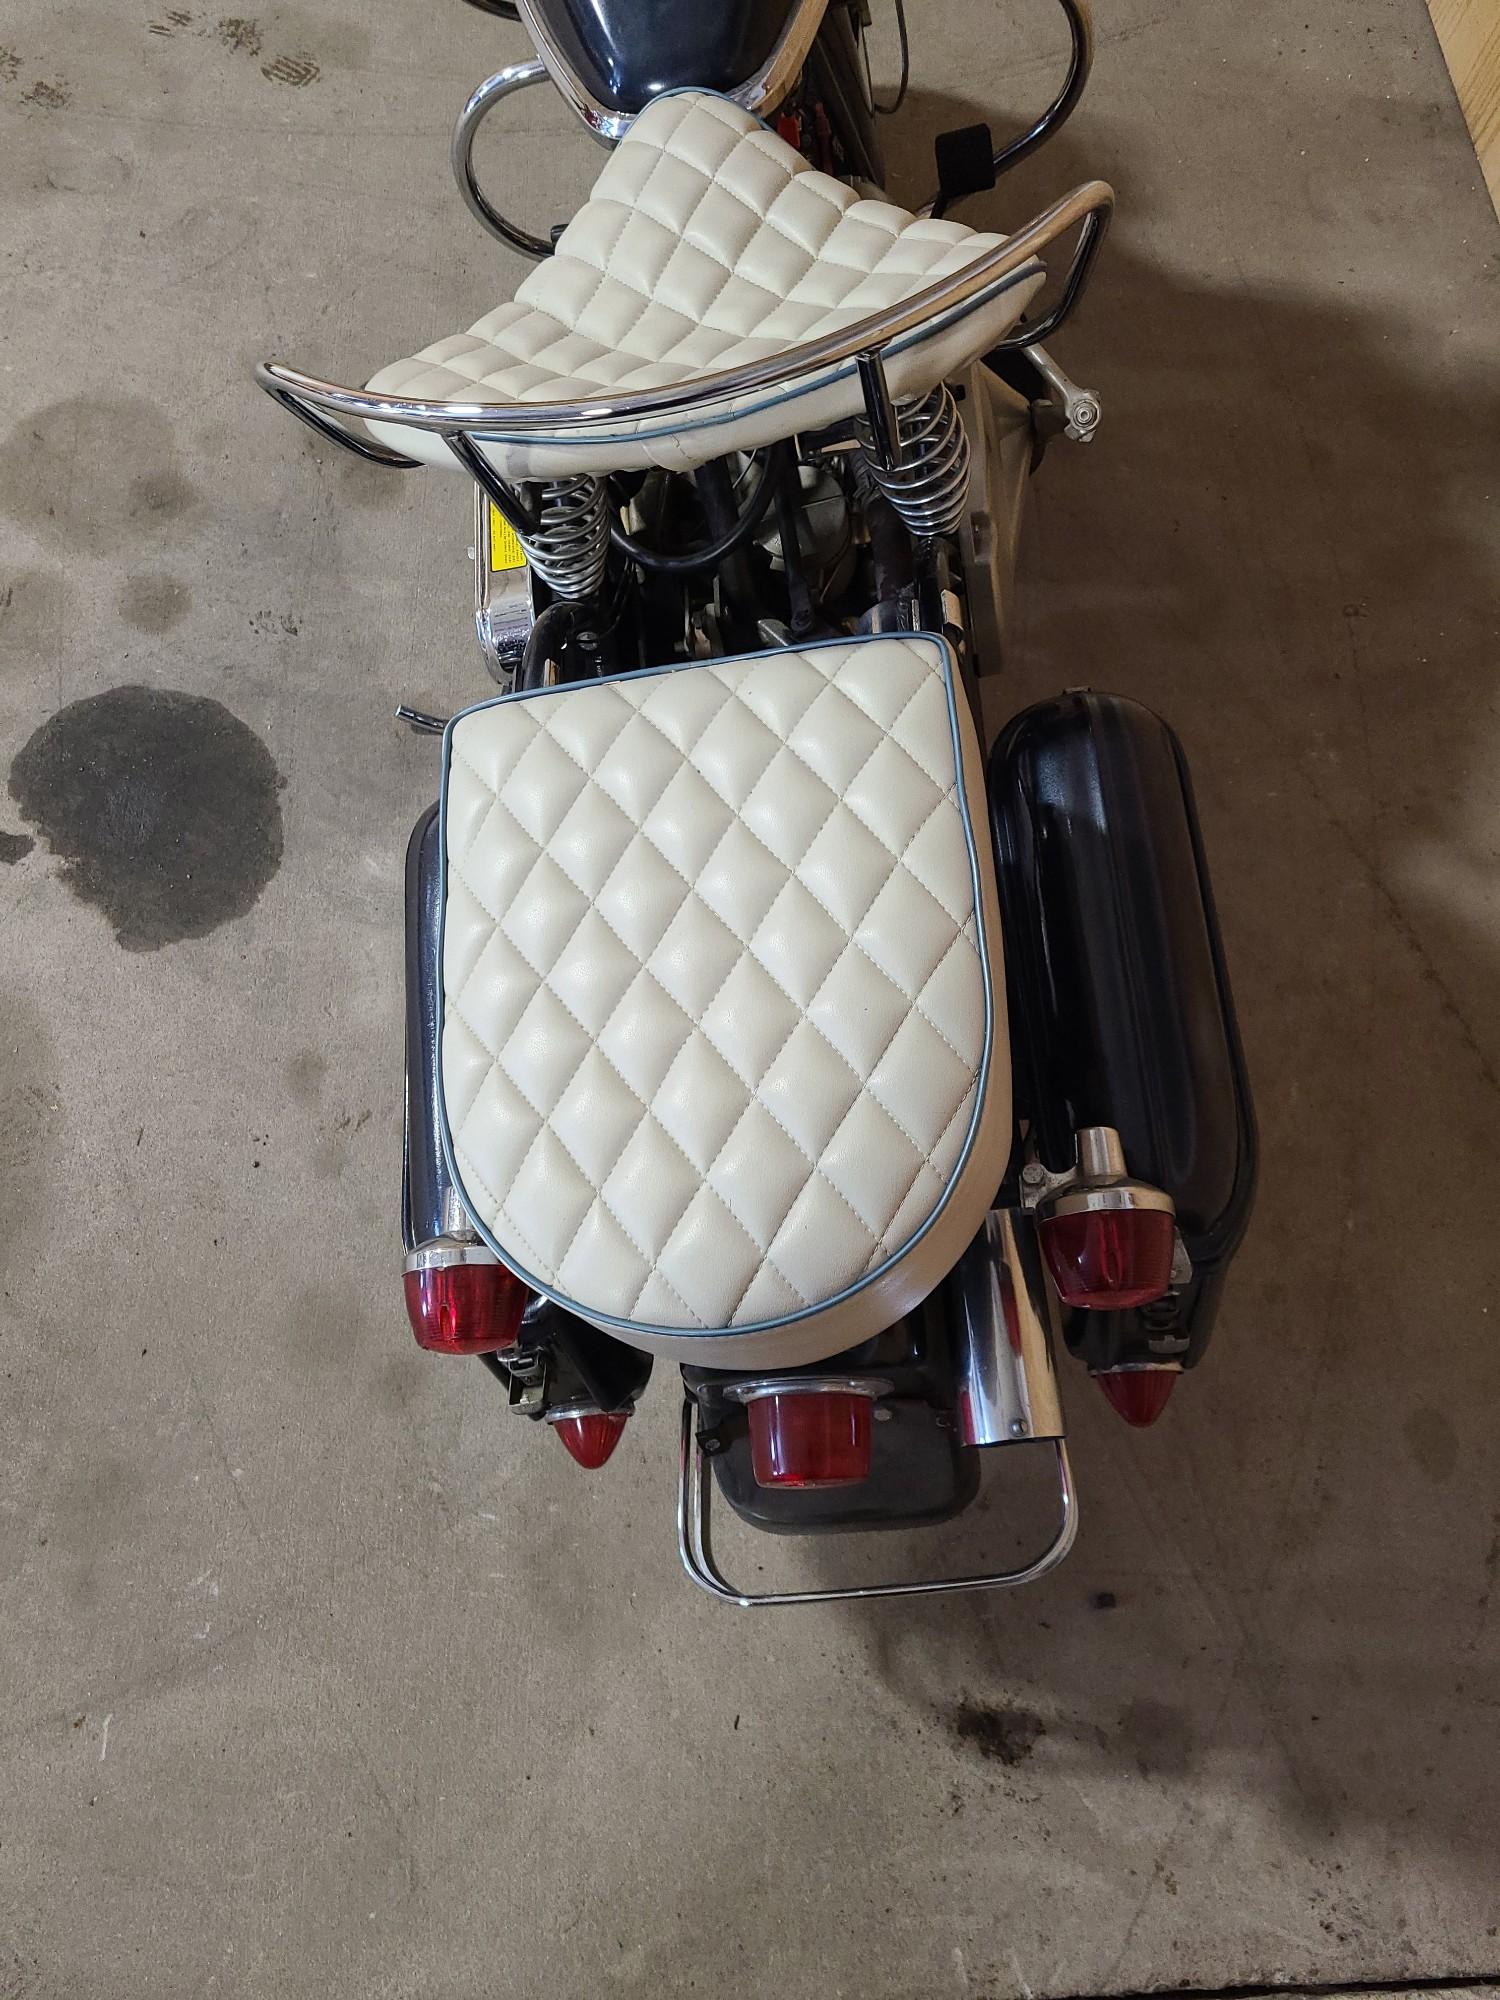 1965 Super Silver Eagle Scooter Custom